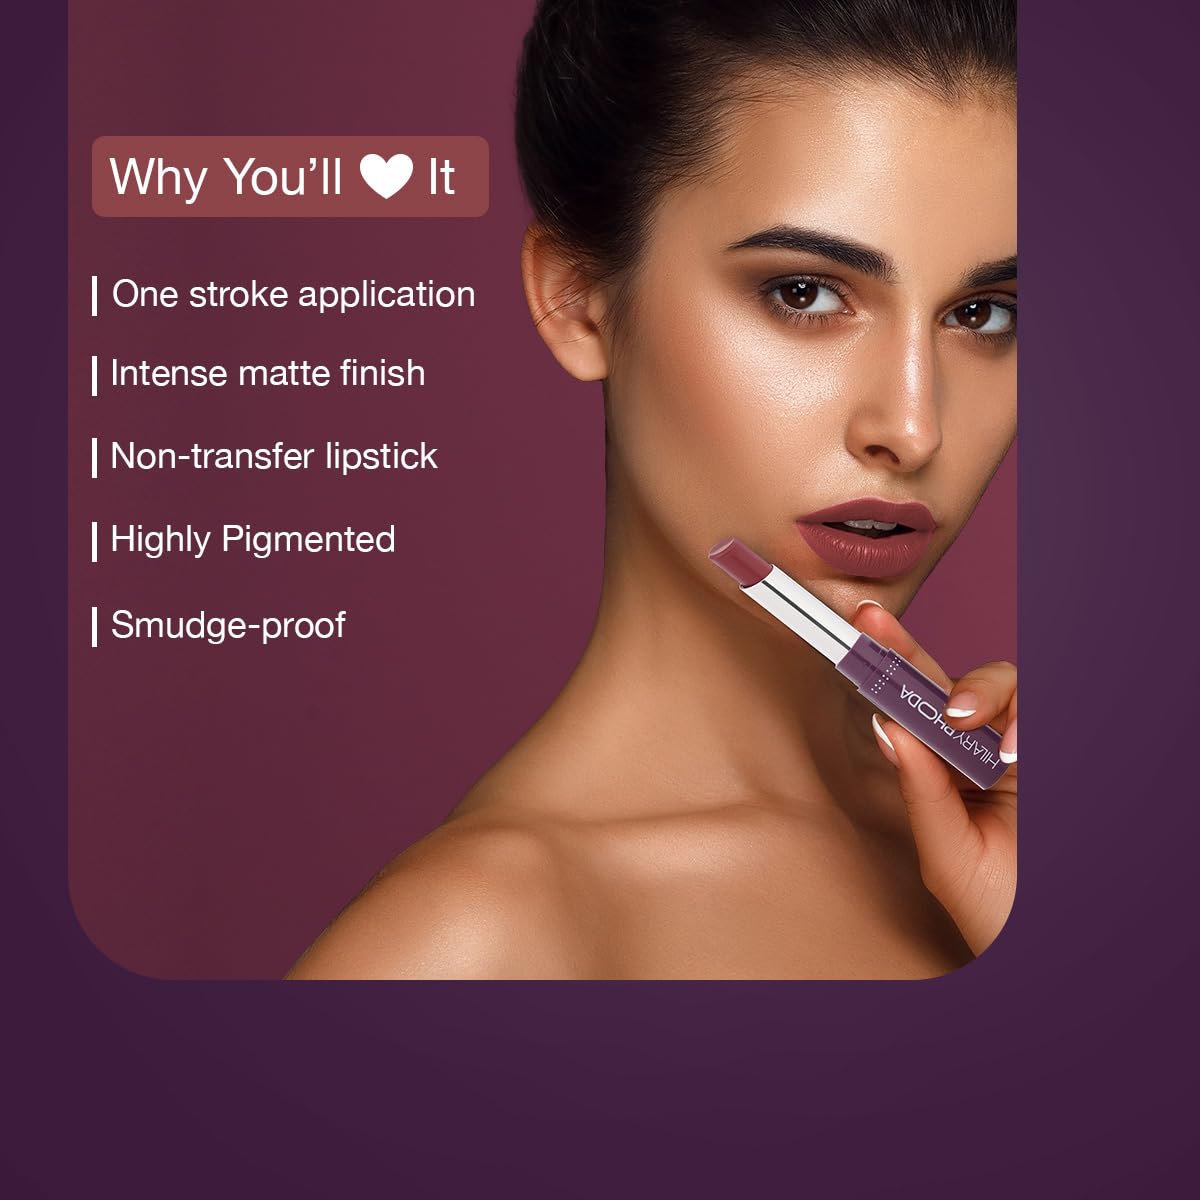 Hilary Rhoda Pro Matte Non-Transfer Lipstick | Waterproof Lipstick | Non-Transfer Lipstick | 12-Hour Long Stay | Smudge-Proof Lipstick | 24 Shades | Highly Pigmented Matte Finish Lipstick | 2g